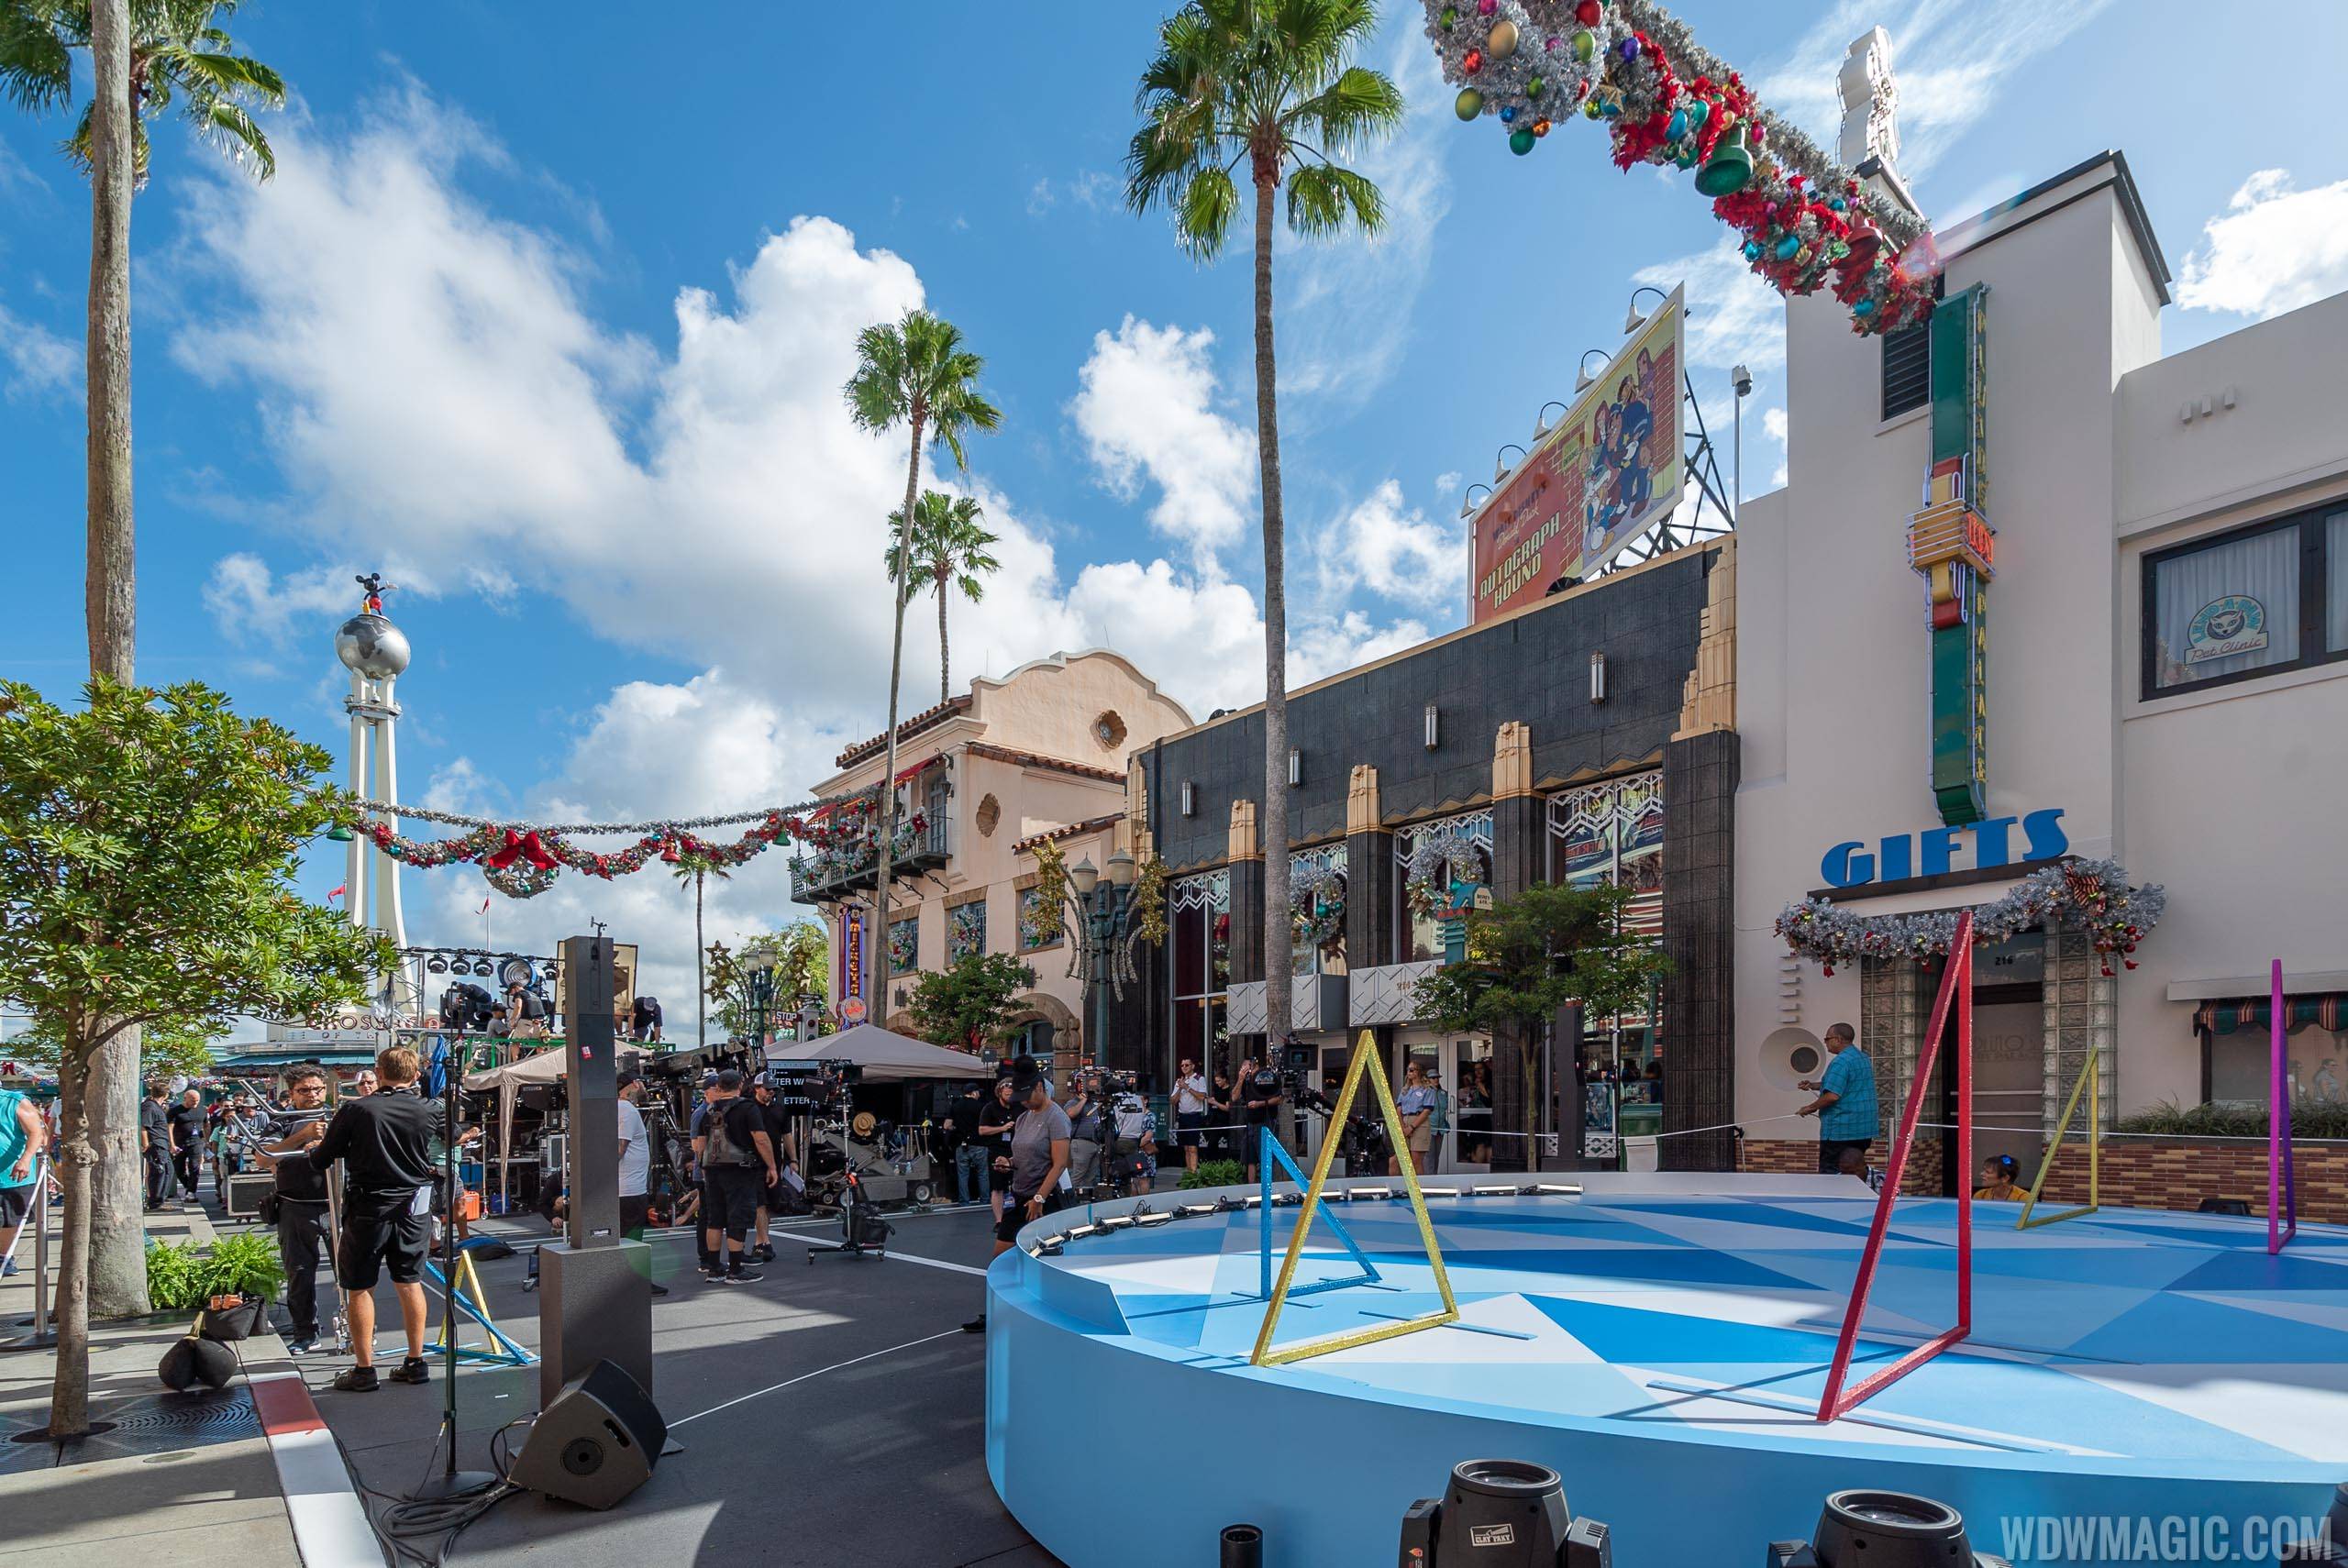 ABC Holiday Specials filming at Disney's Hollywood Studios 2019